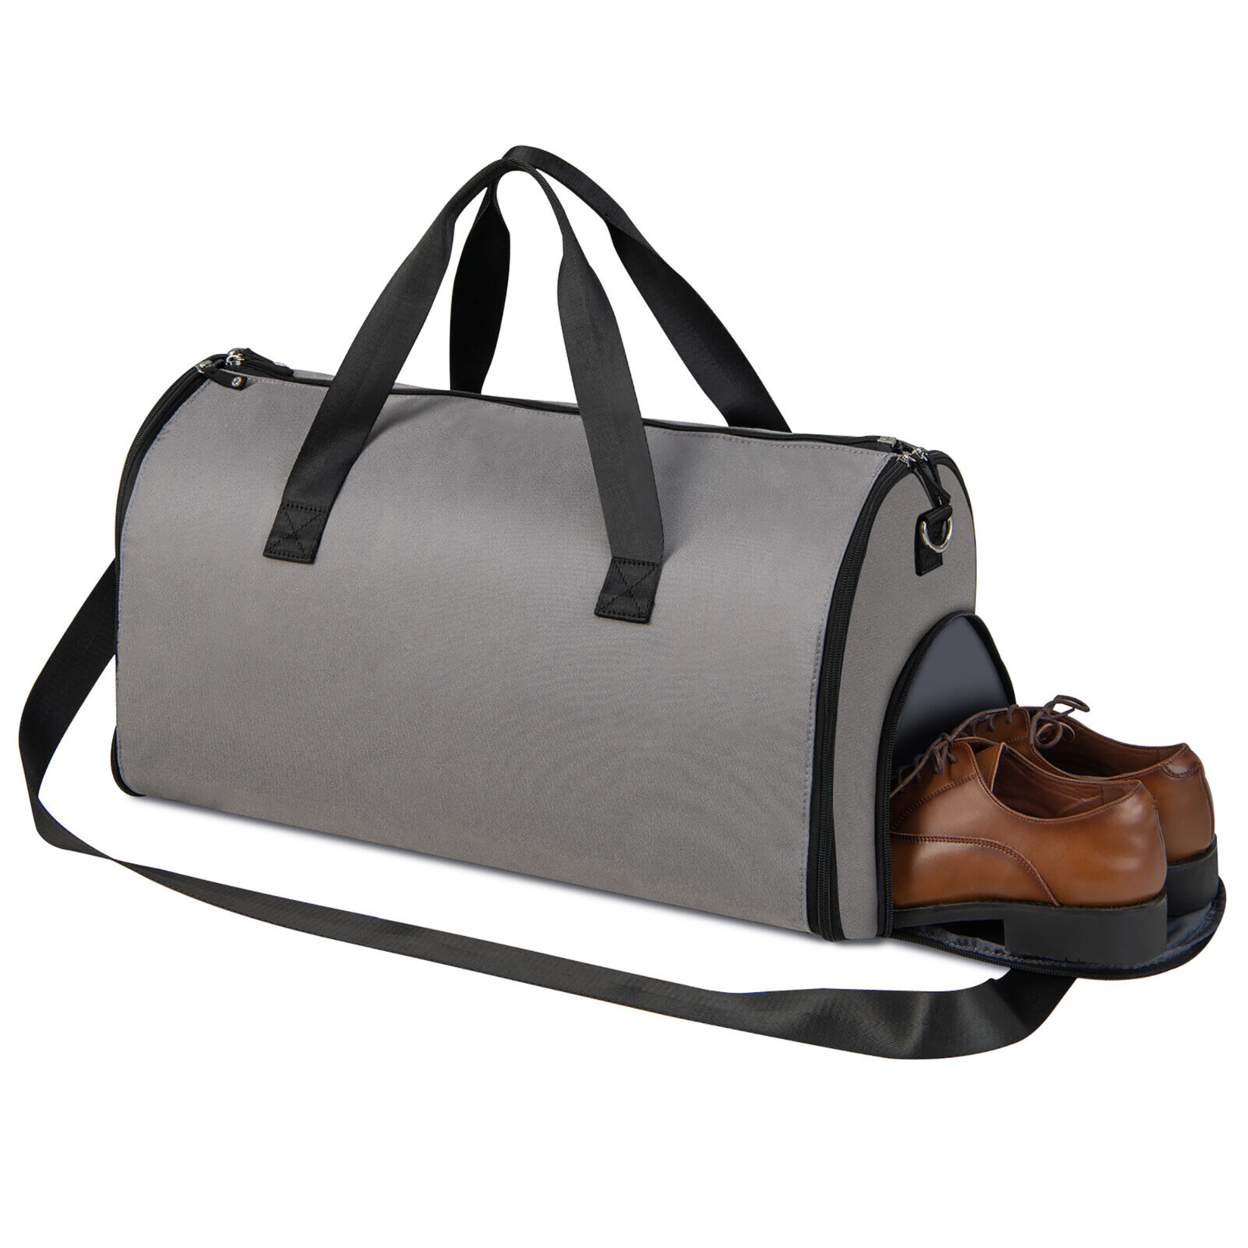 2 In 1 Duffel Garment Bag Hanging Suit Travel Bag W/ Shoe Compartment & Strap Light - Dark Grey